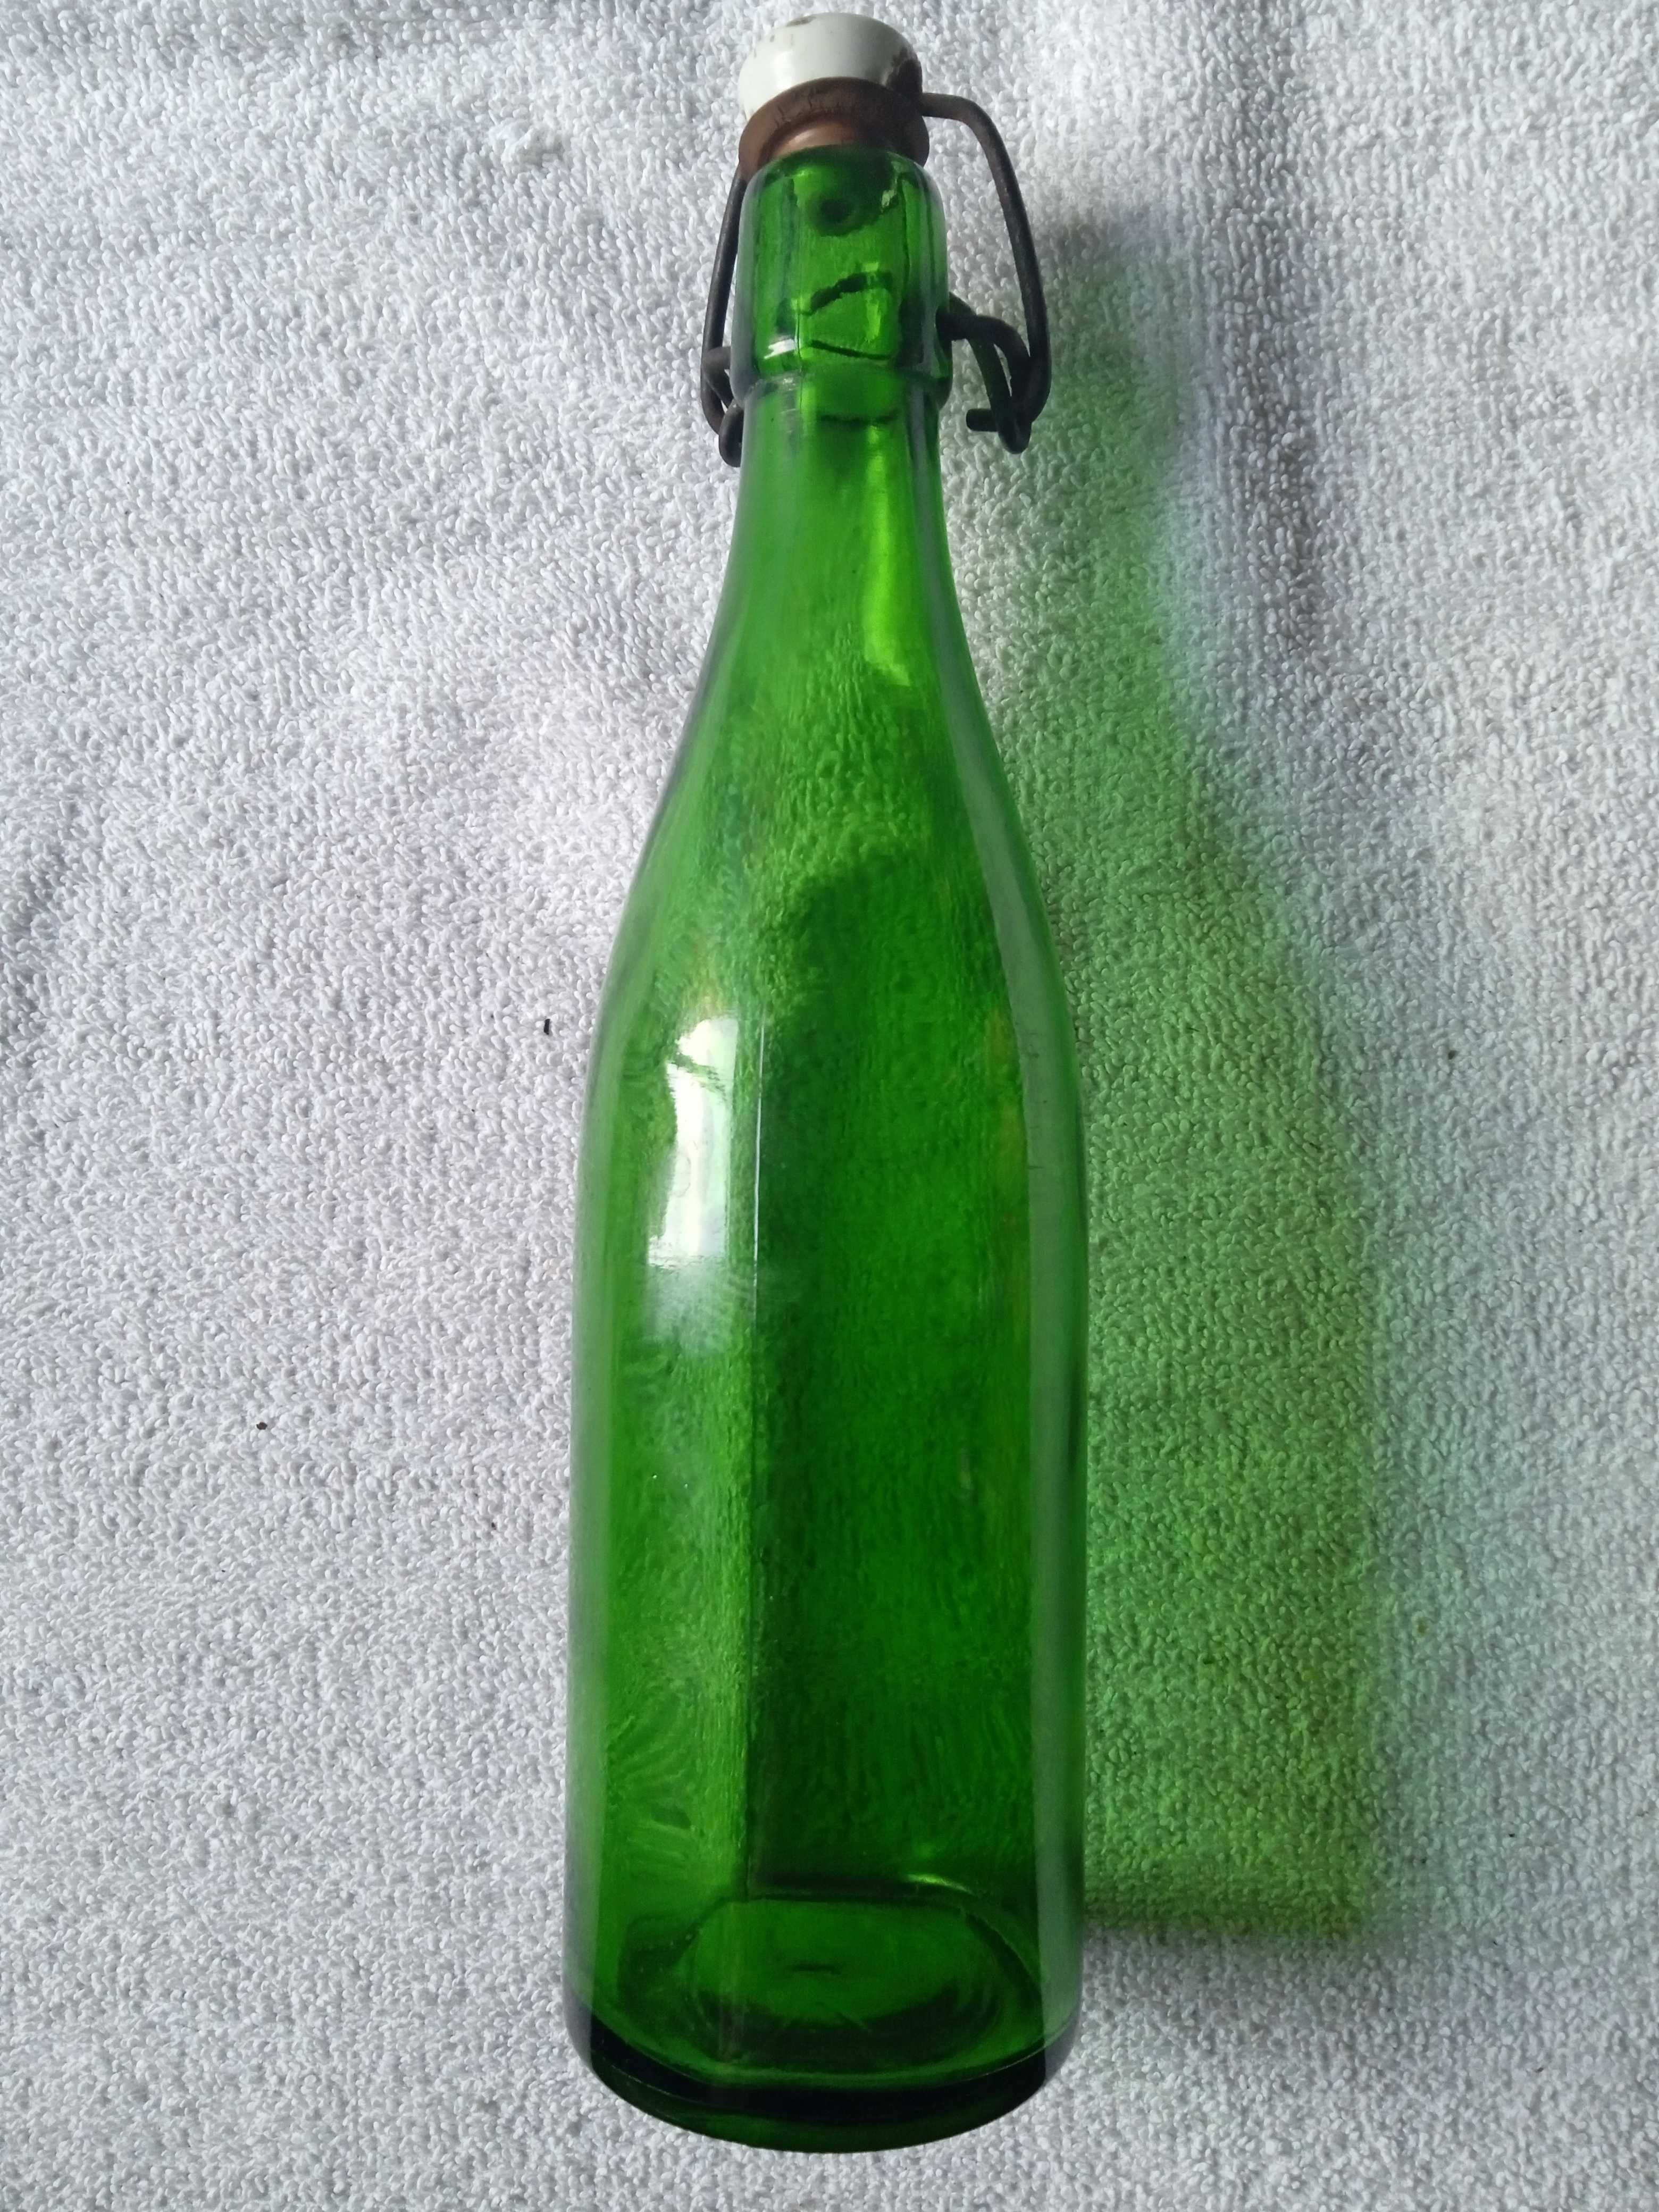 Butelka z porcelanką, PRL, zielona.